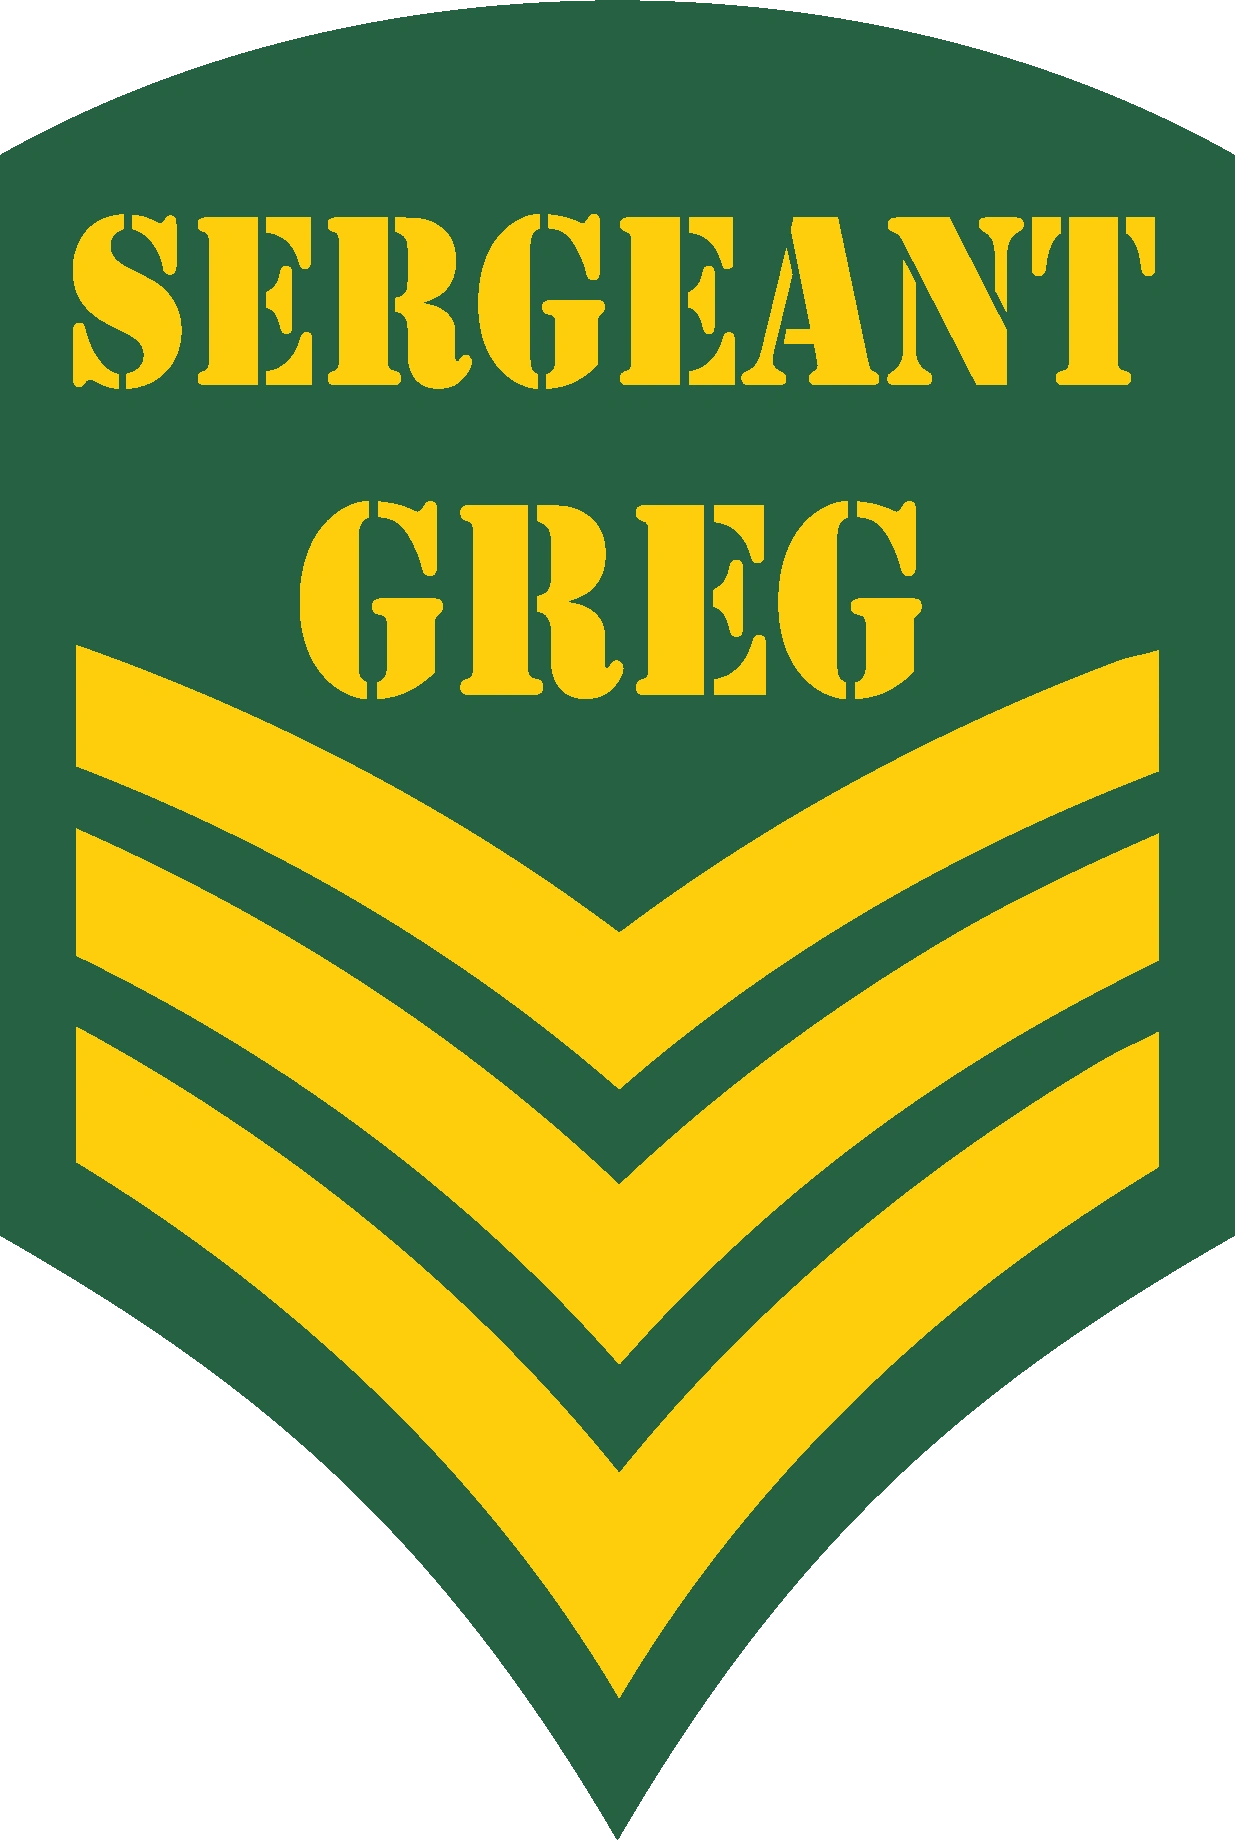 Sergeant Greg inc. est une laser game intérieur à Whitehorse
Laser tag room located in Whitehorse